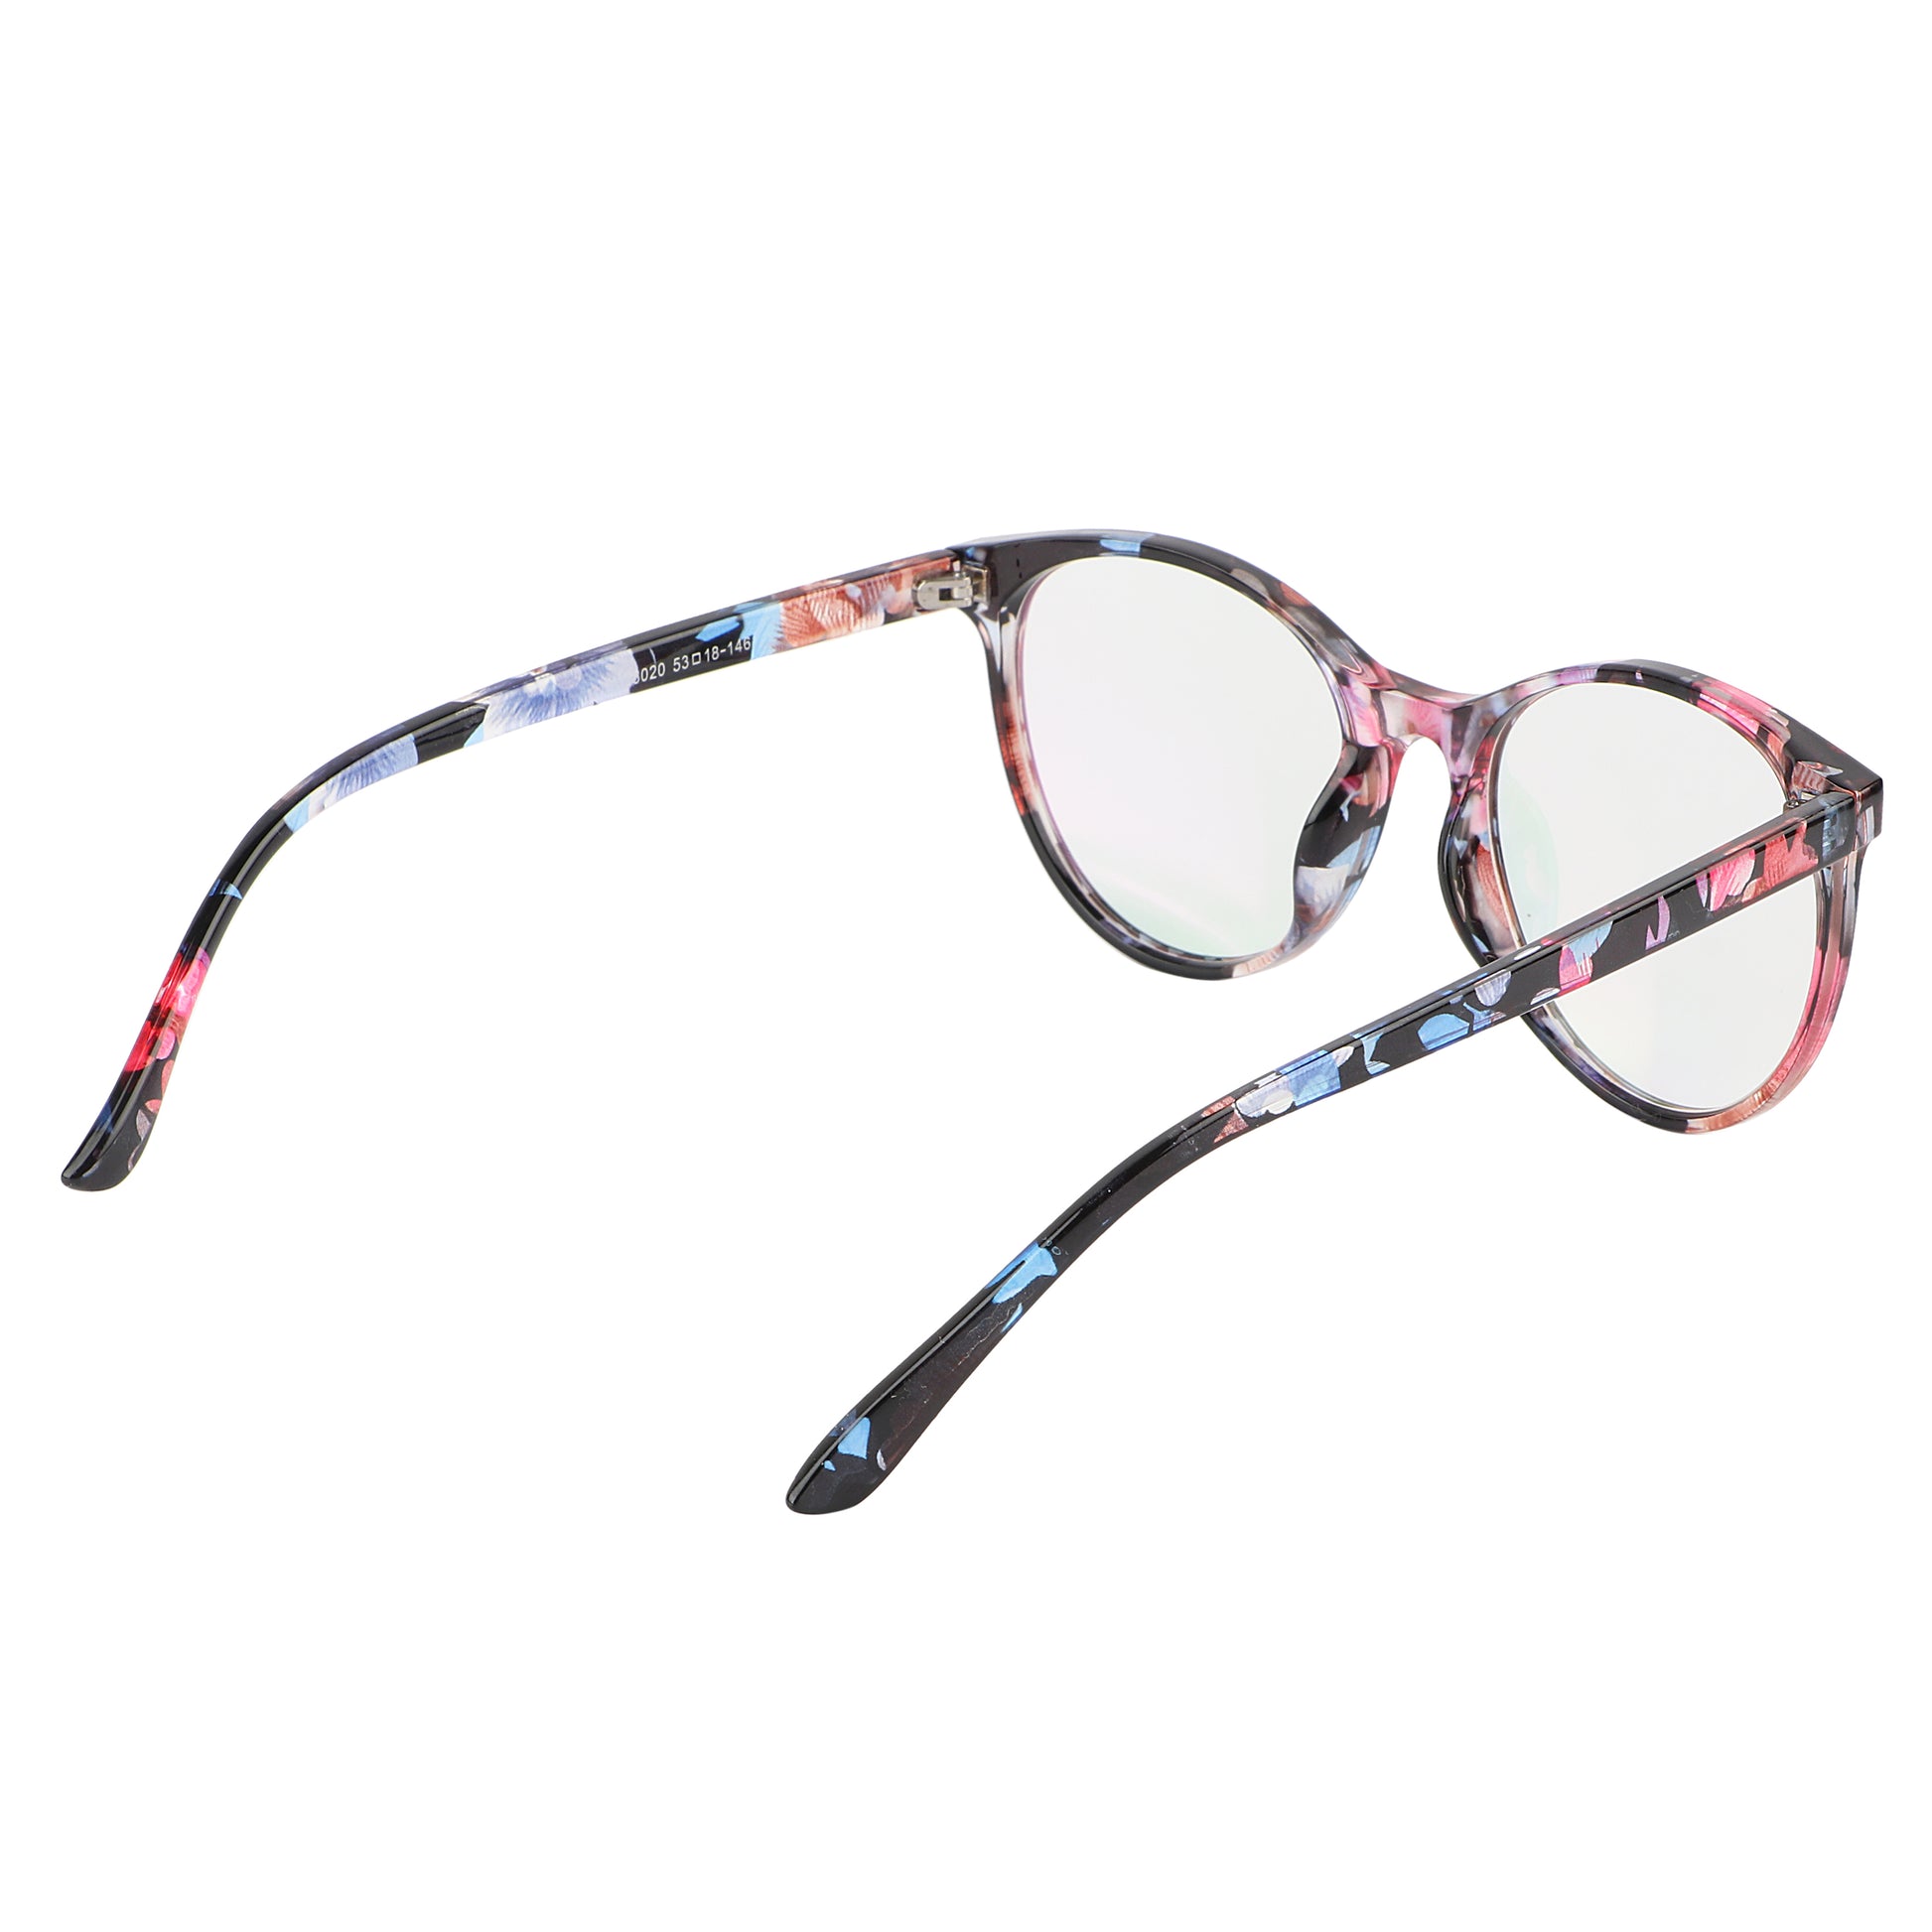 Jodykoes Oversize Fashionable Anti Glare Round Frame (Multicolour) - Jodykoes ®